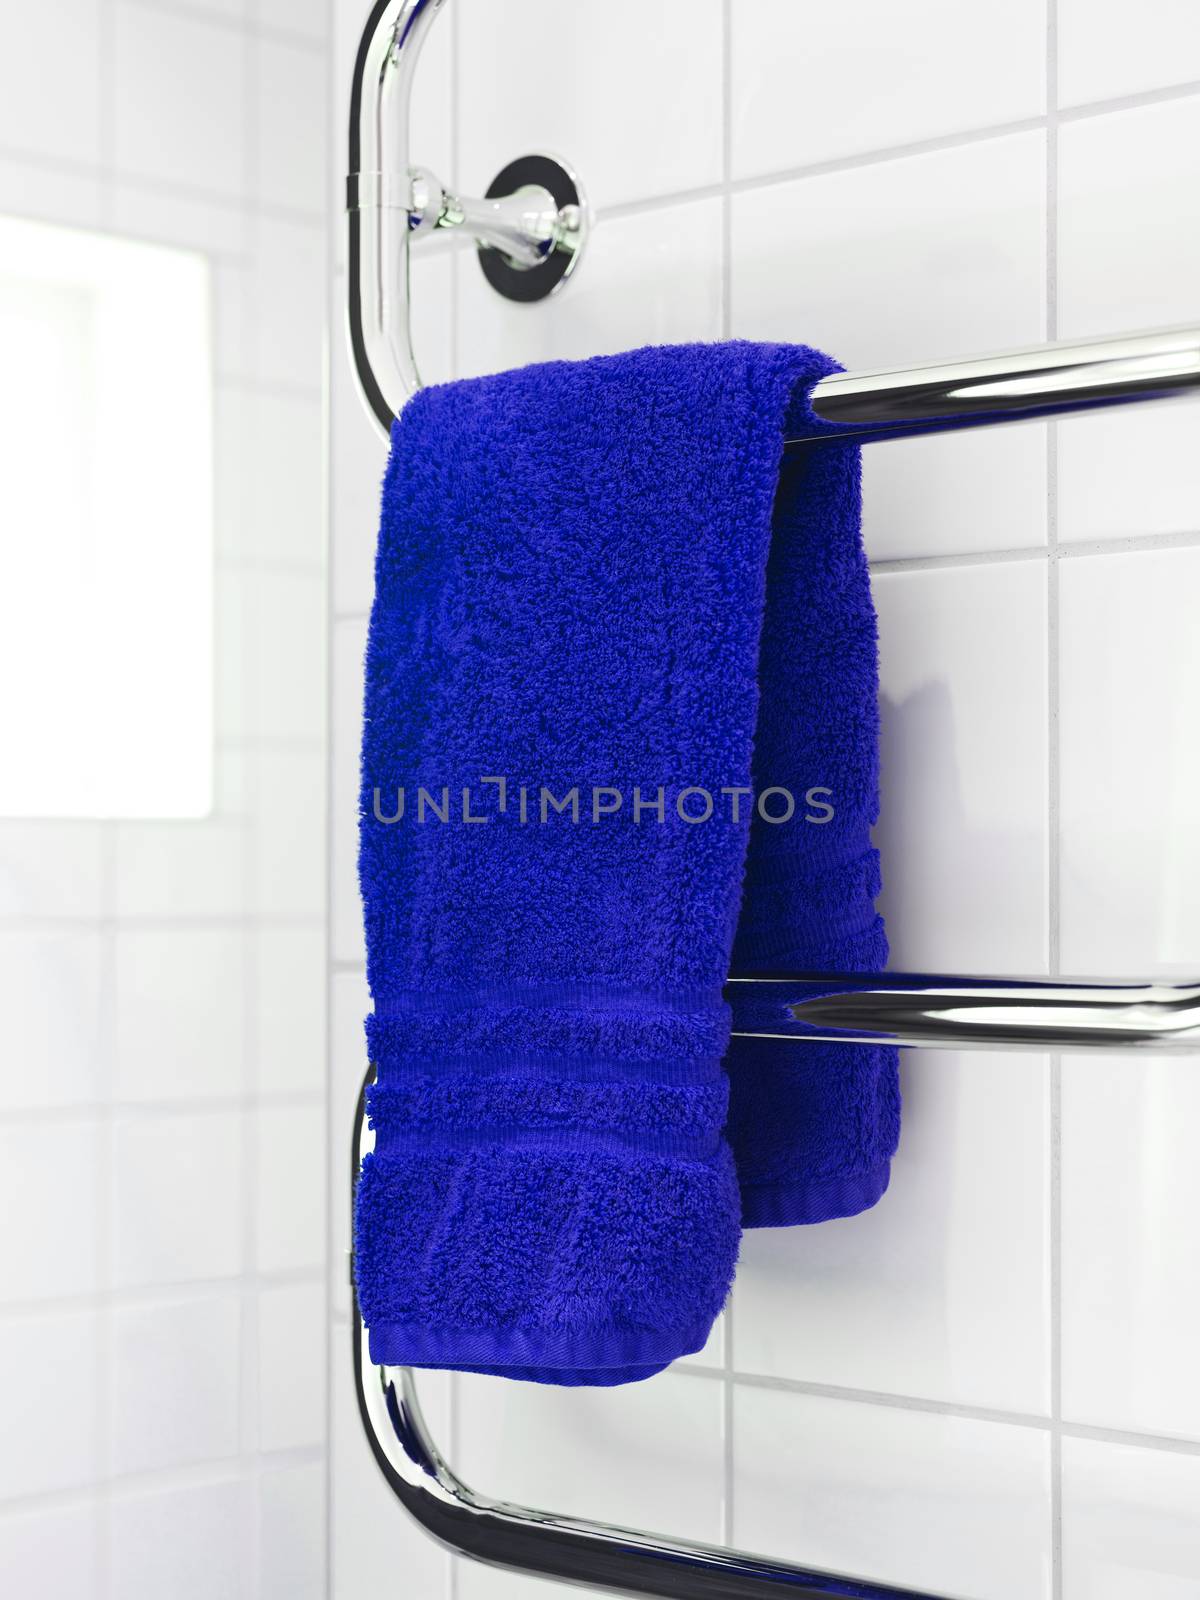 Blue towel on a dryer by gemenacom